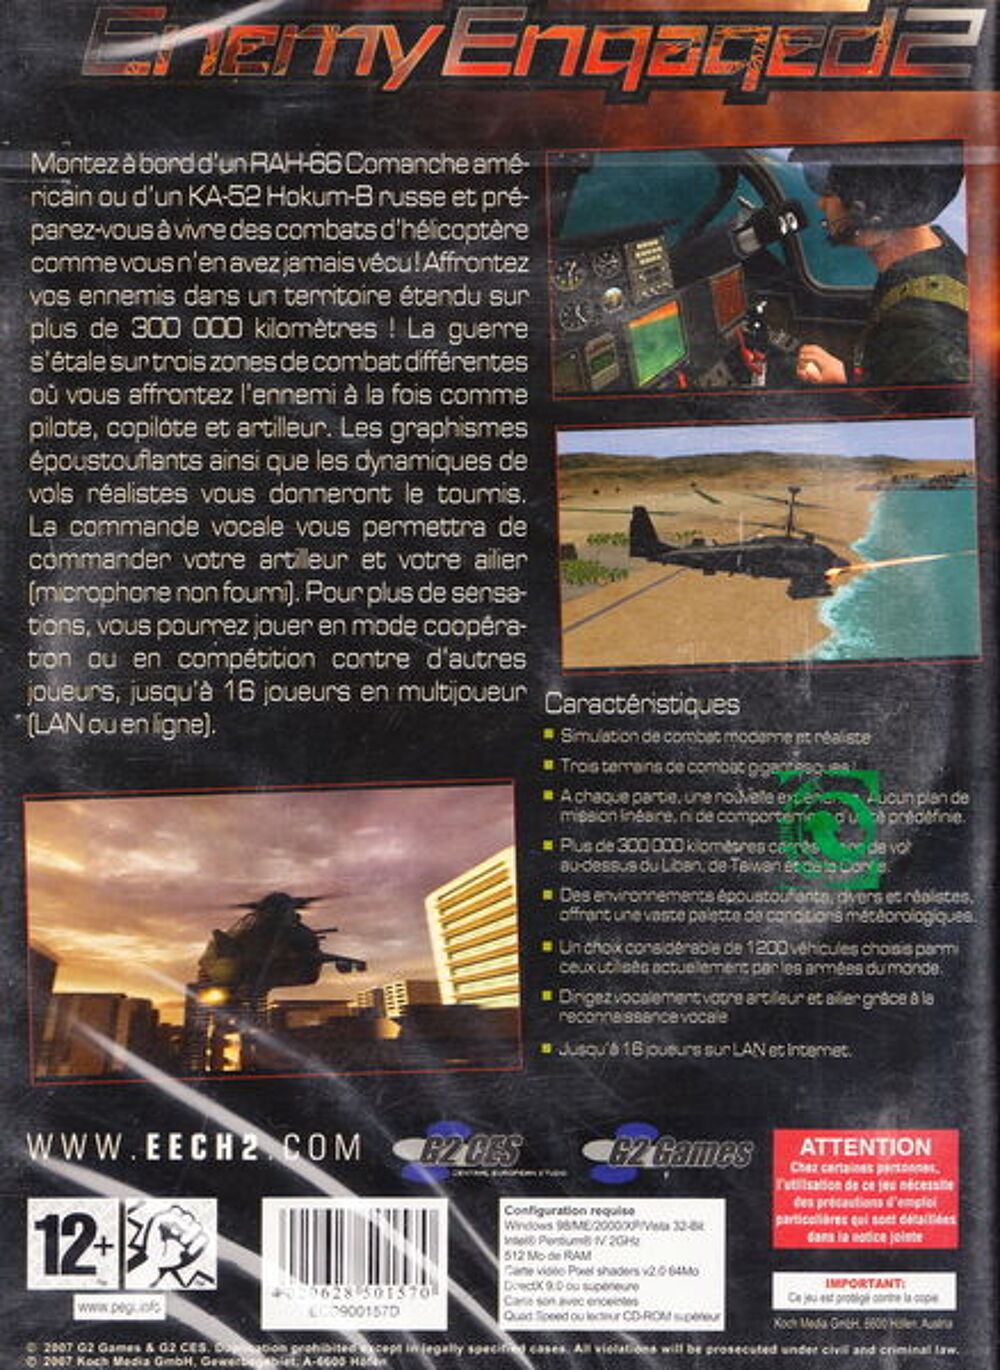 CD Jeu PC Enemy Engaged 2 NEUF blister
Consoles et jeux vidos